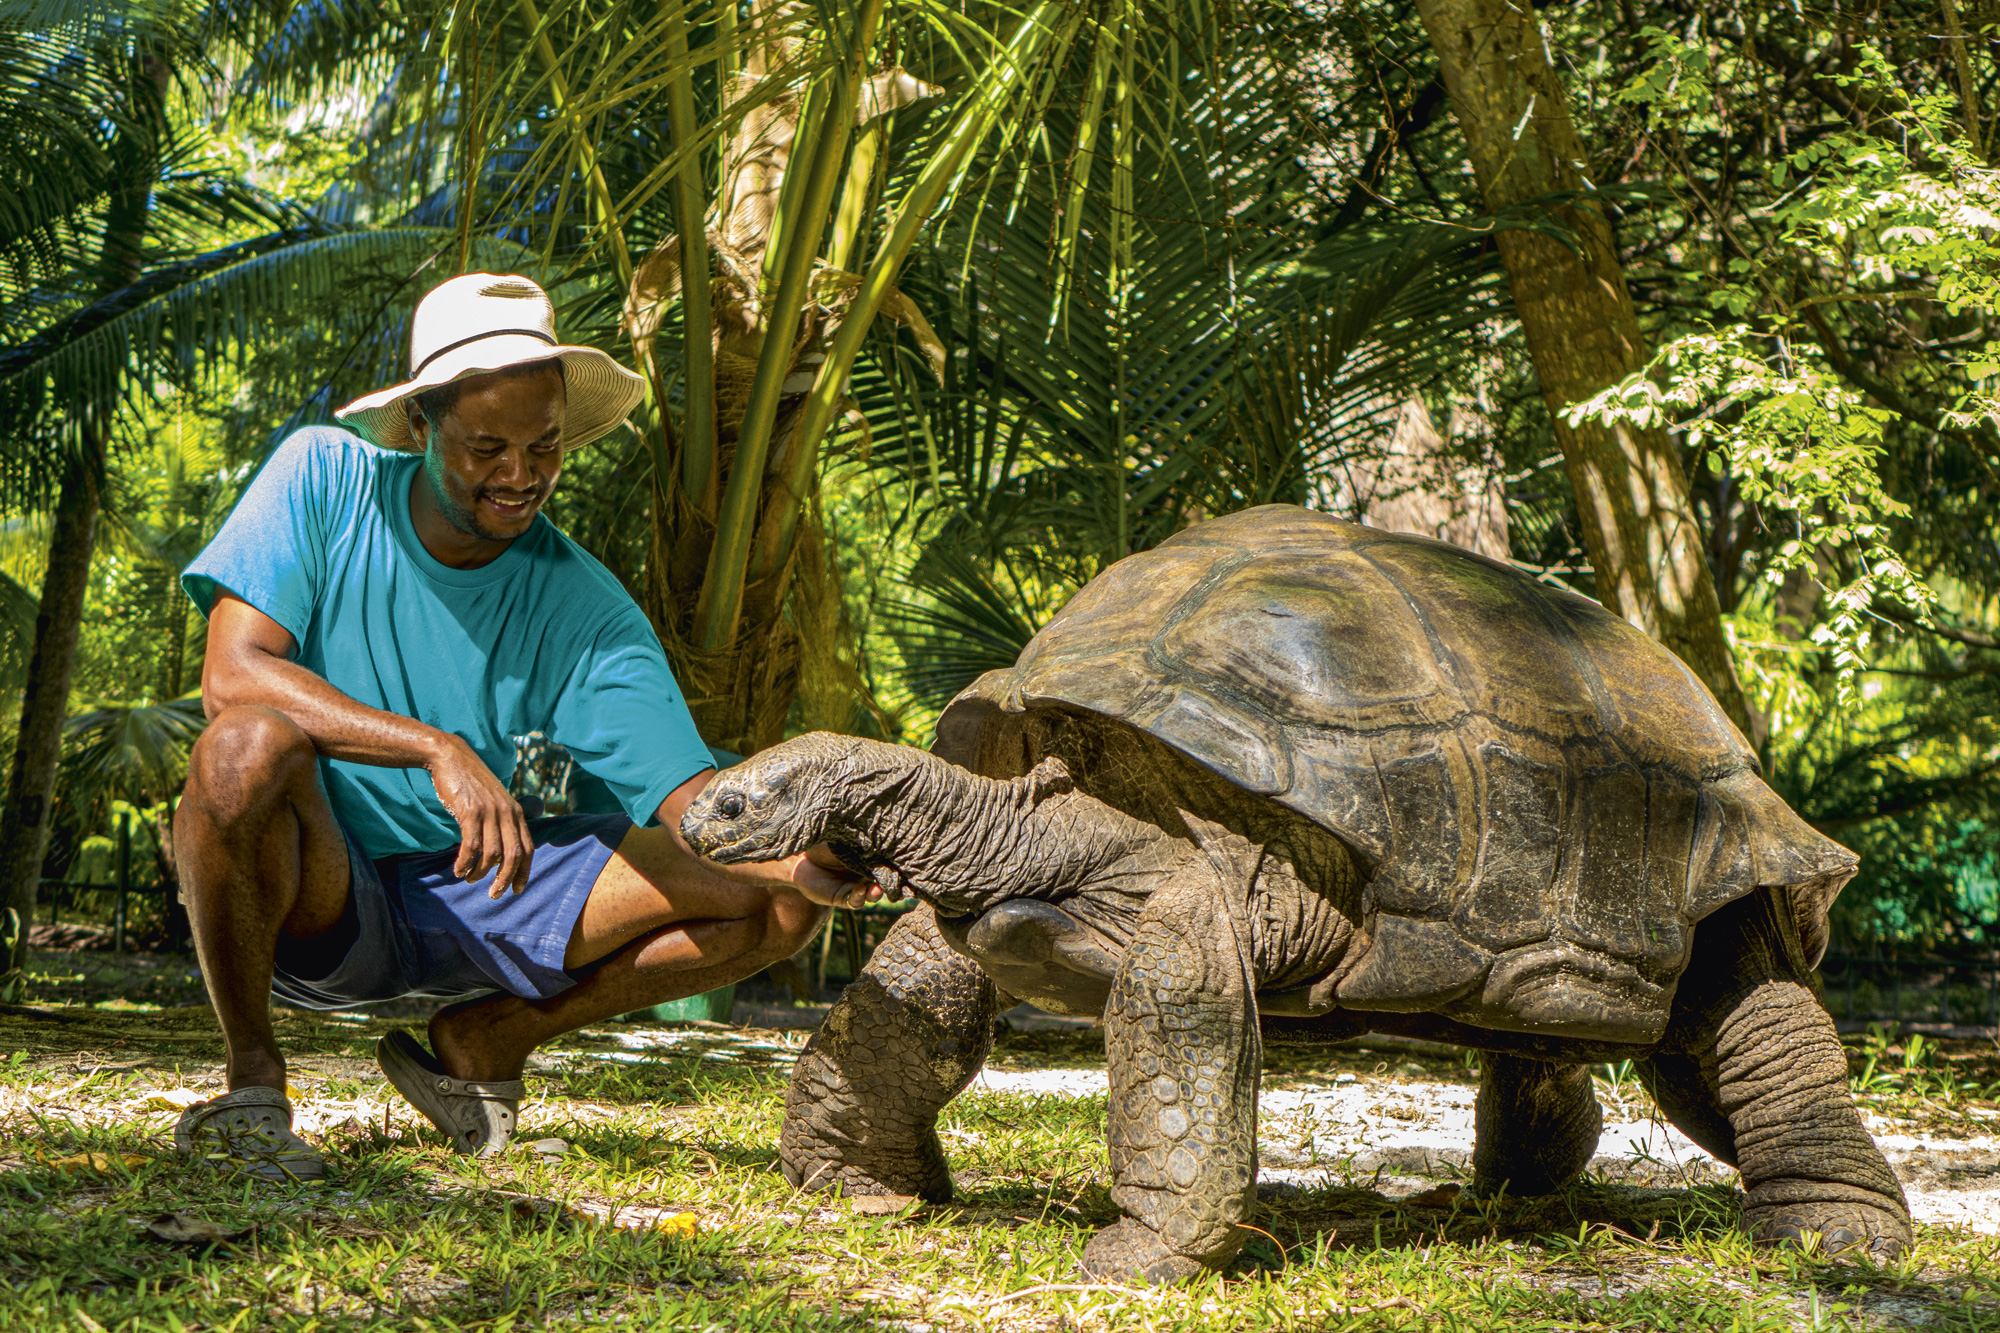 The Seychelles Islands - Giant tortoise